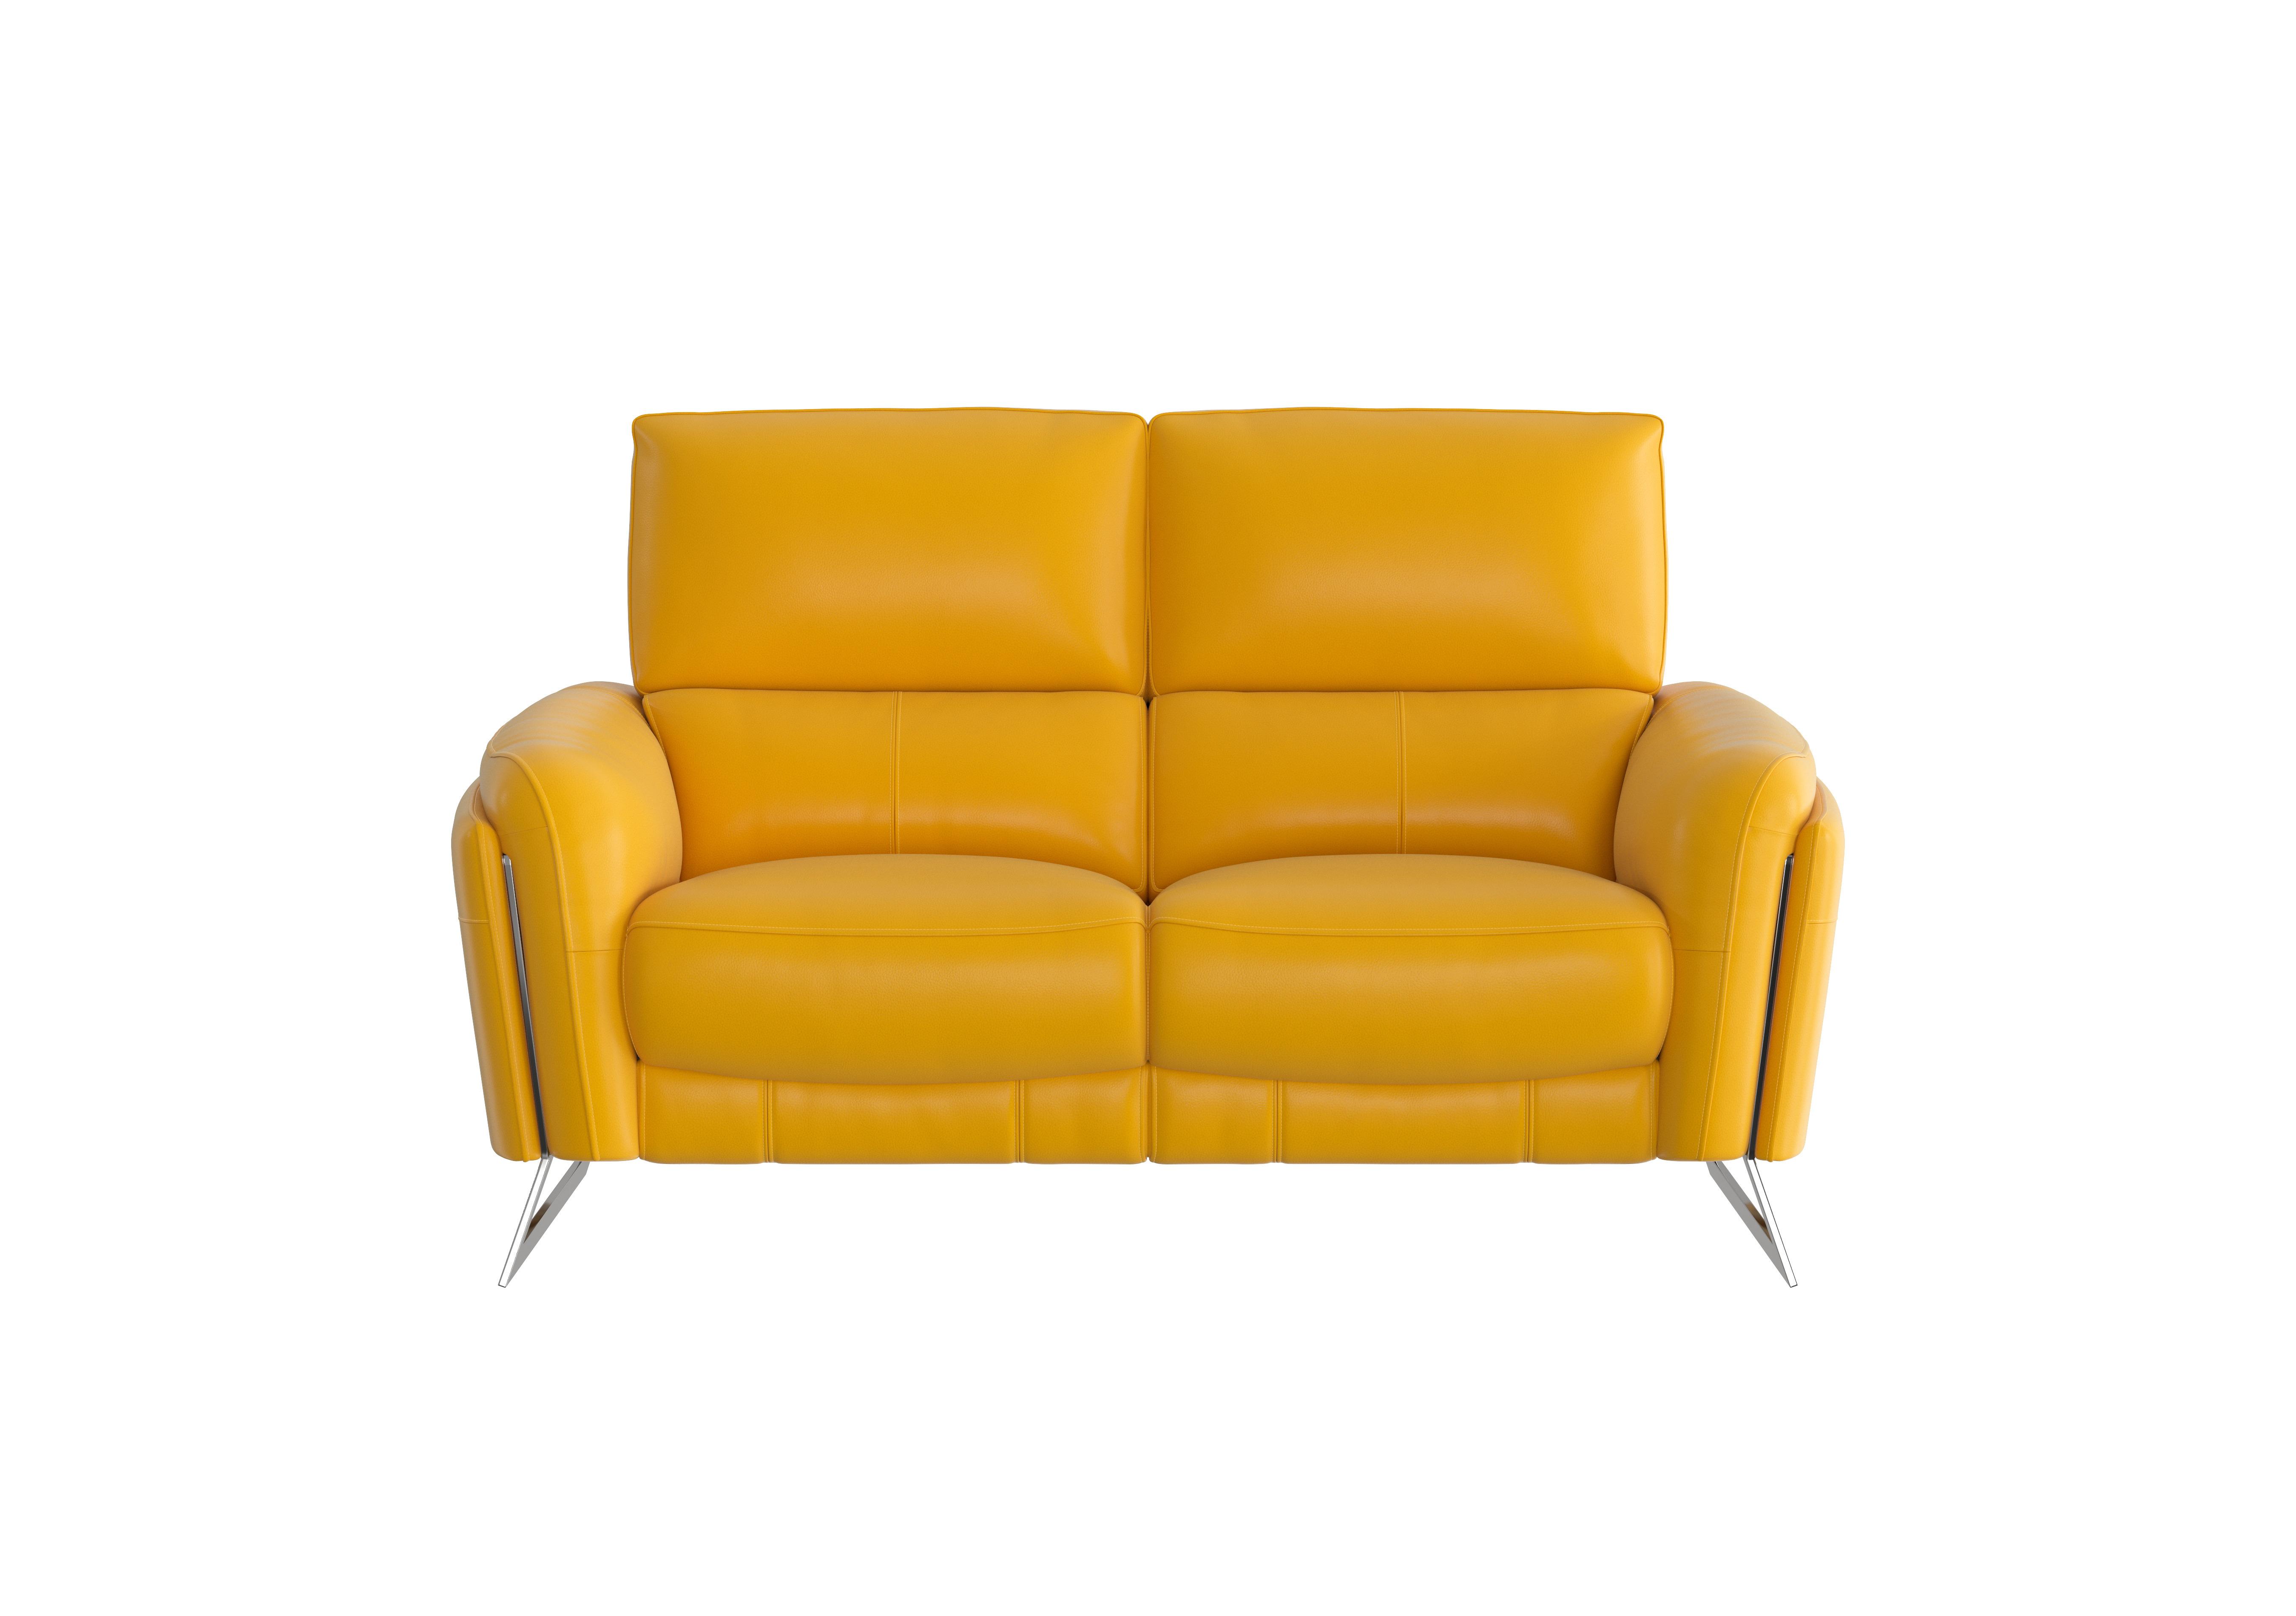 Amarilla 2 Seater Leather Sofa in Nc-303e Sunflower on Furniture Village